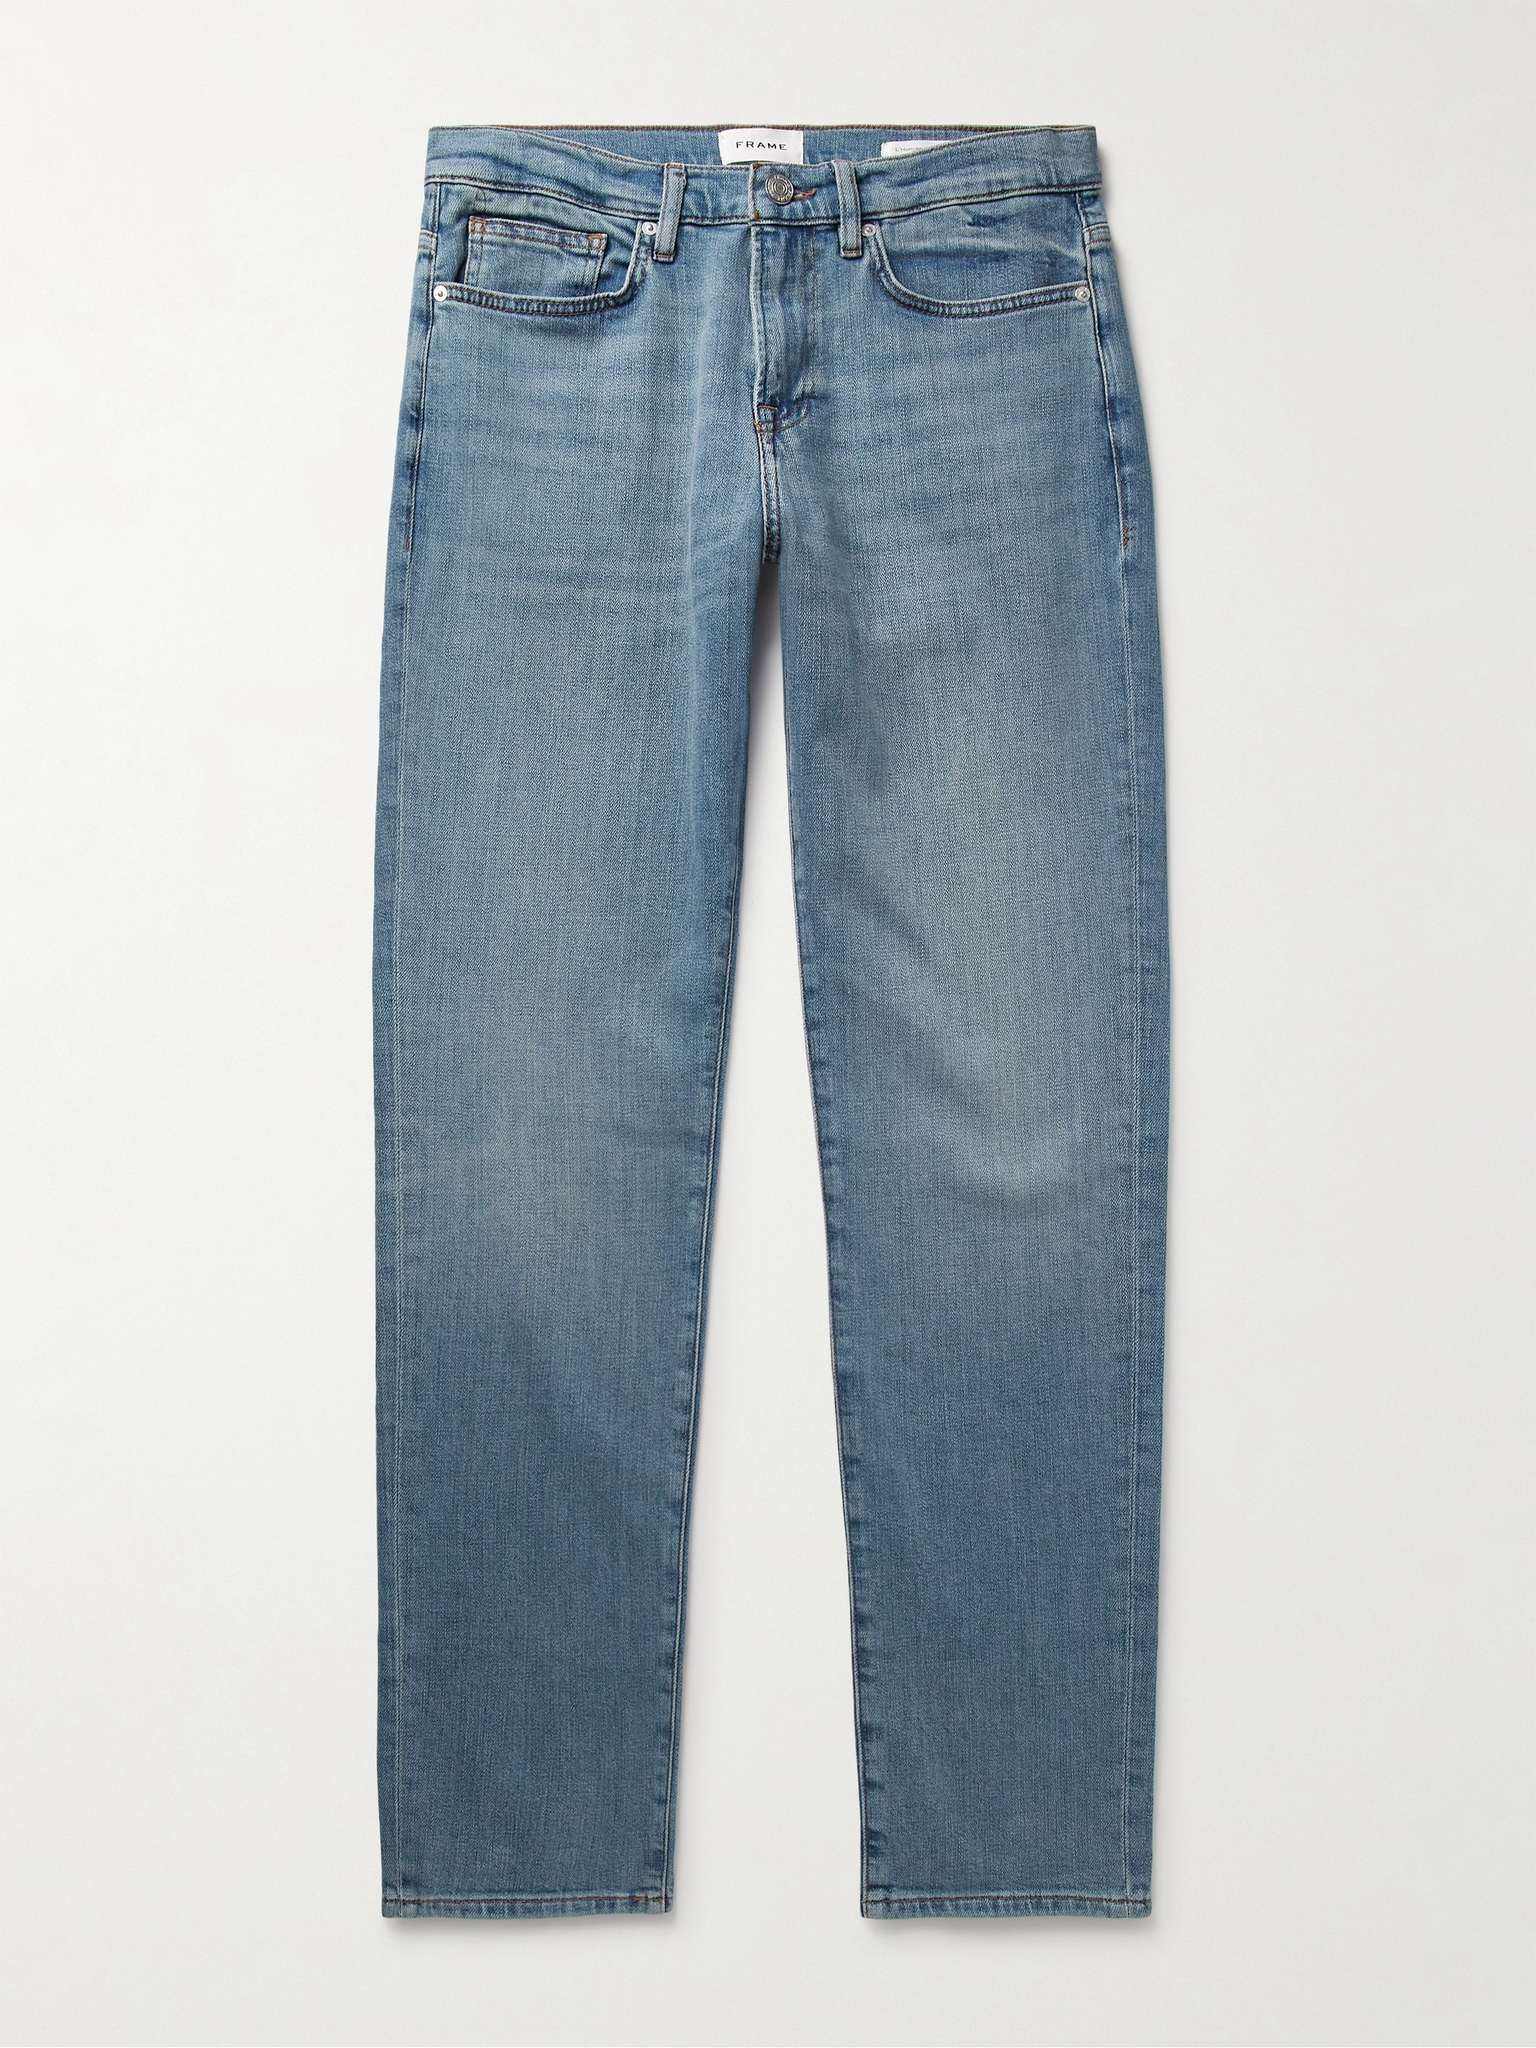 L'Homme Athletic Slim-Fit Jeans - 1